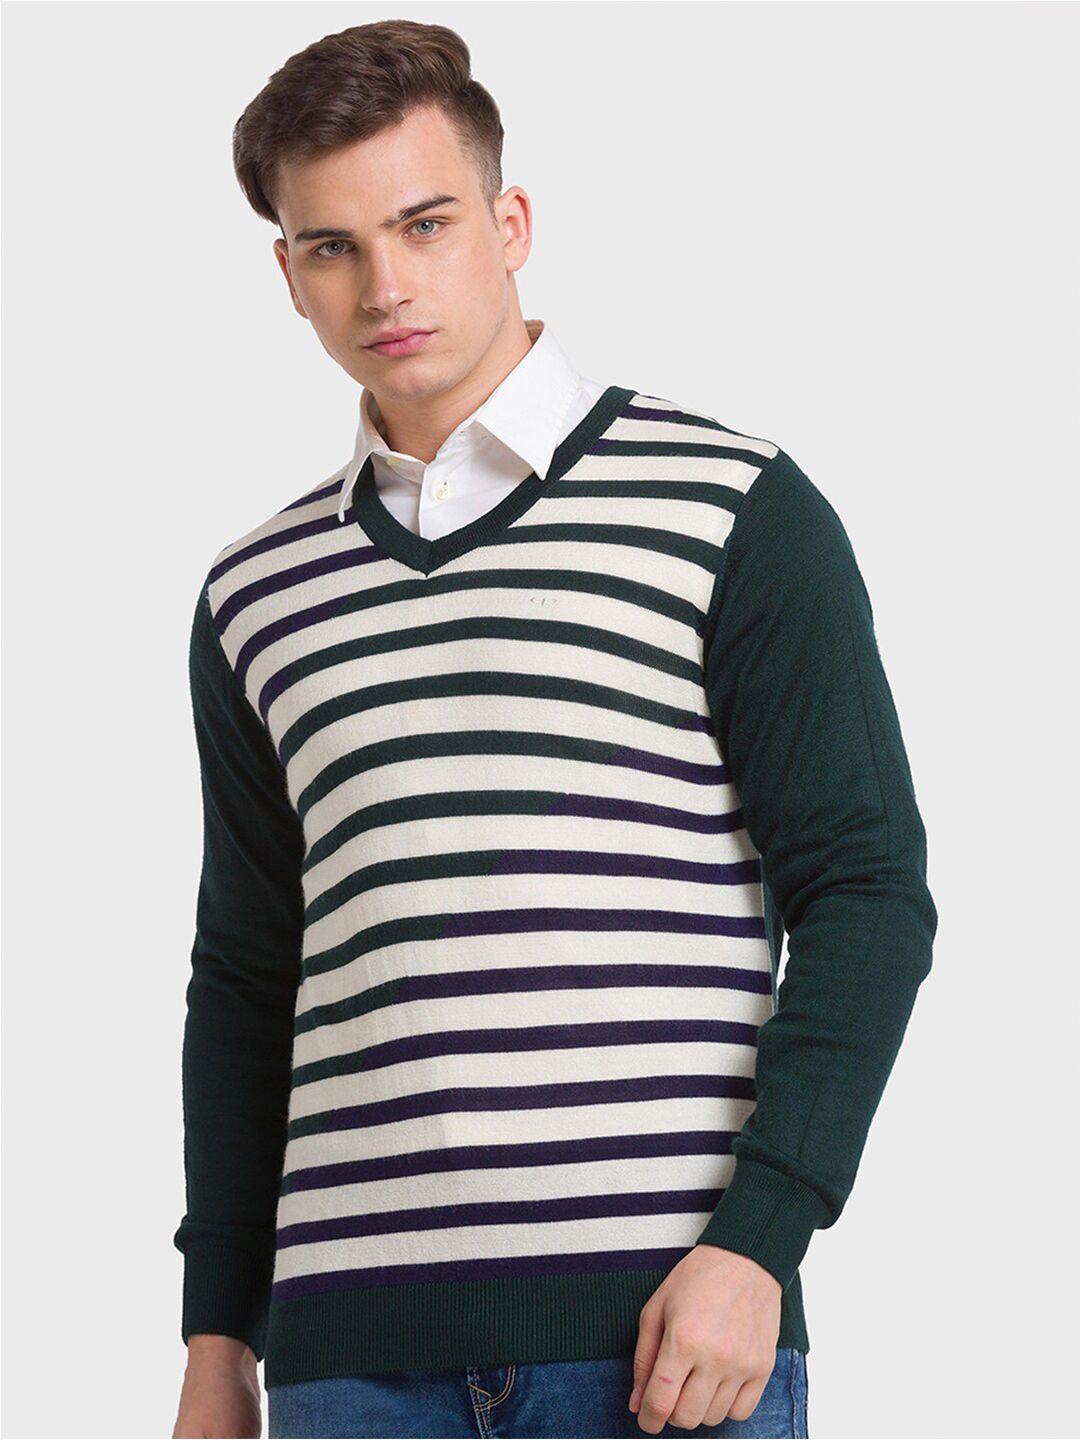 colorplus-striped-pullover-sweater